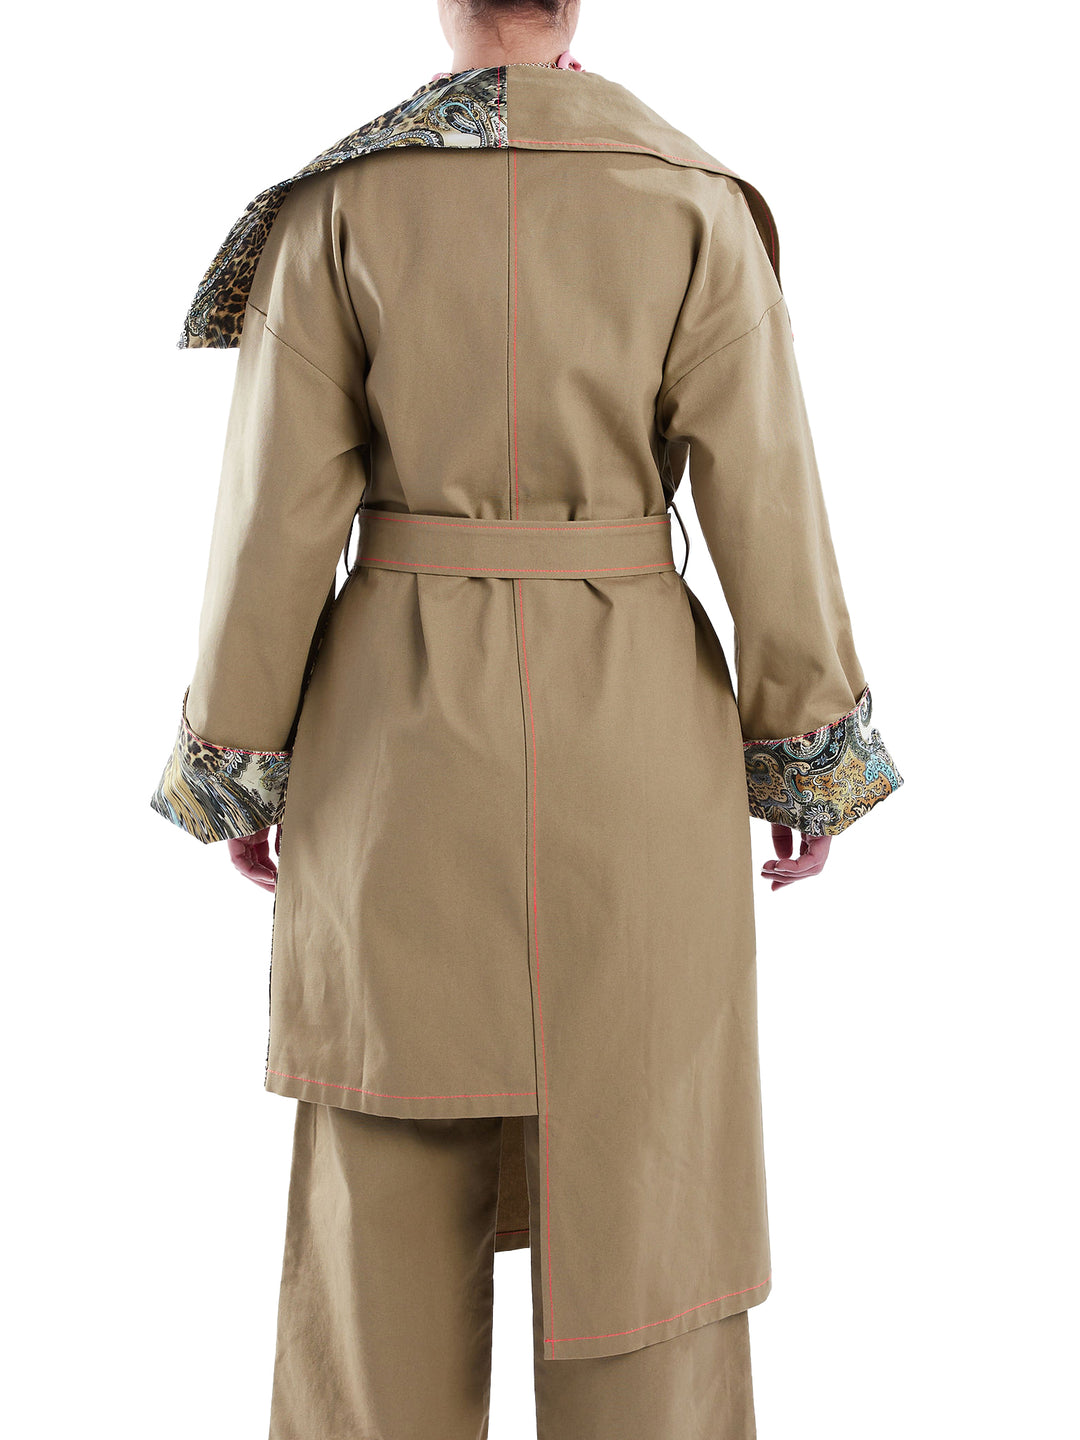 Women’s asymmetrical trench coat